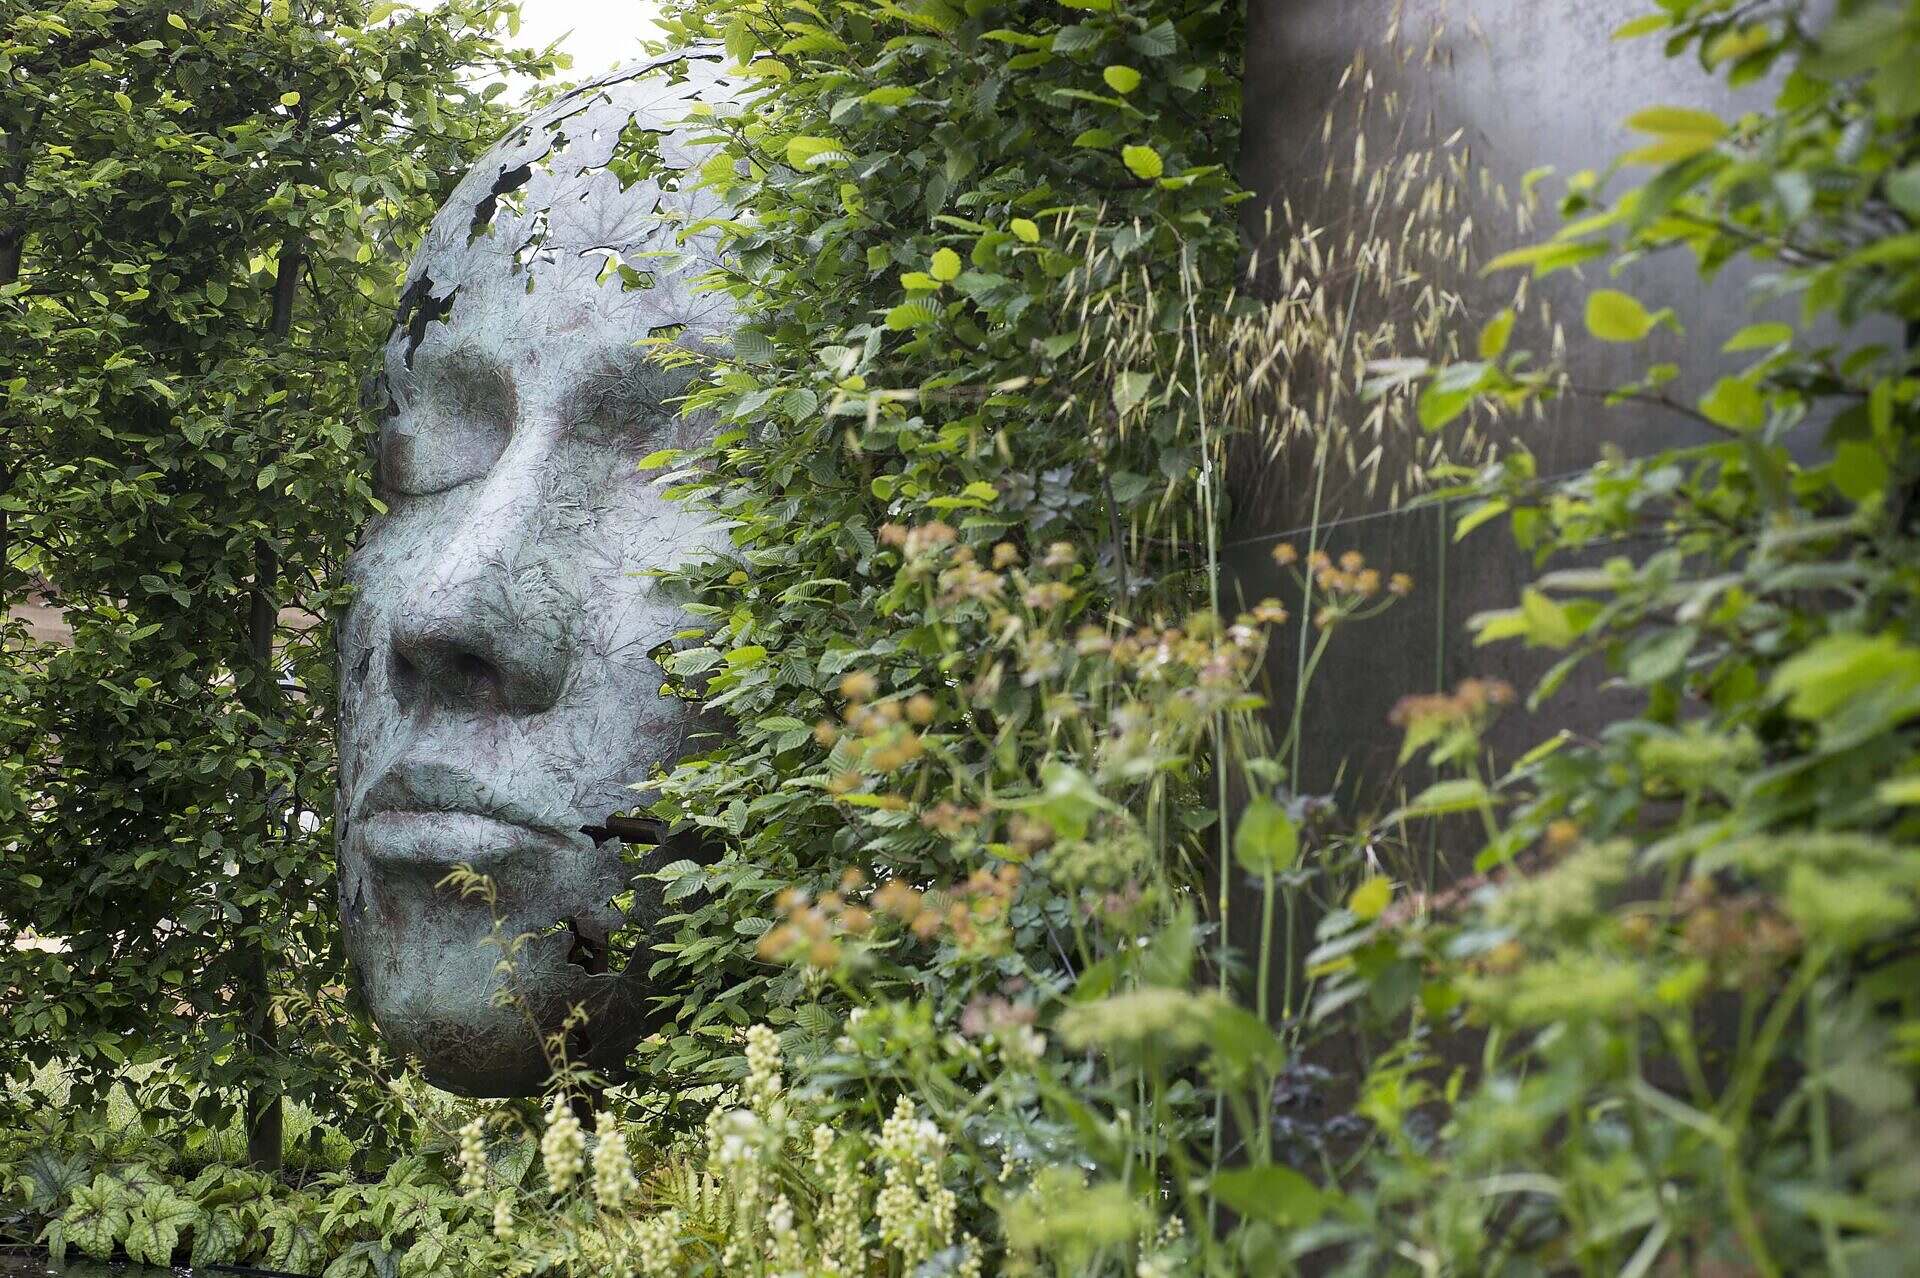 Show garden at RHS Chatsworth showing sculpture